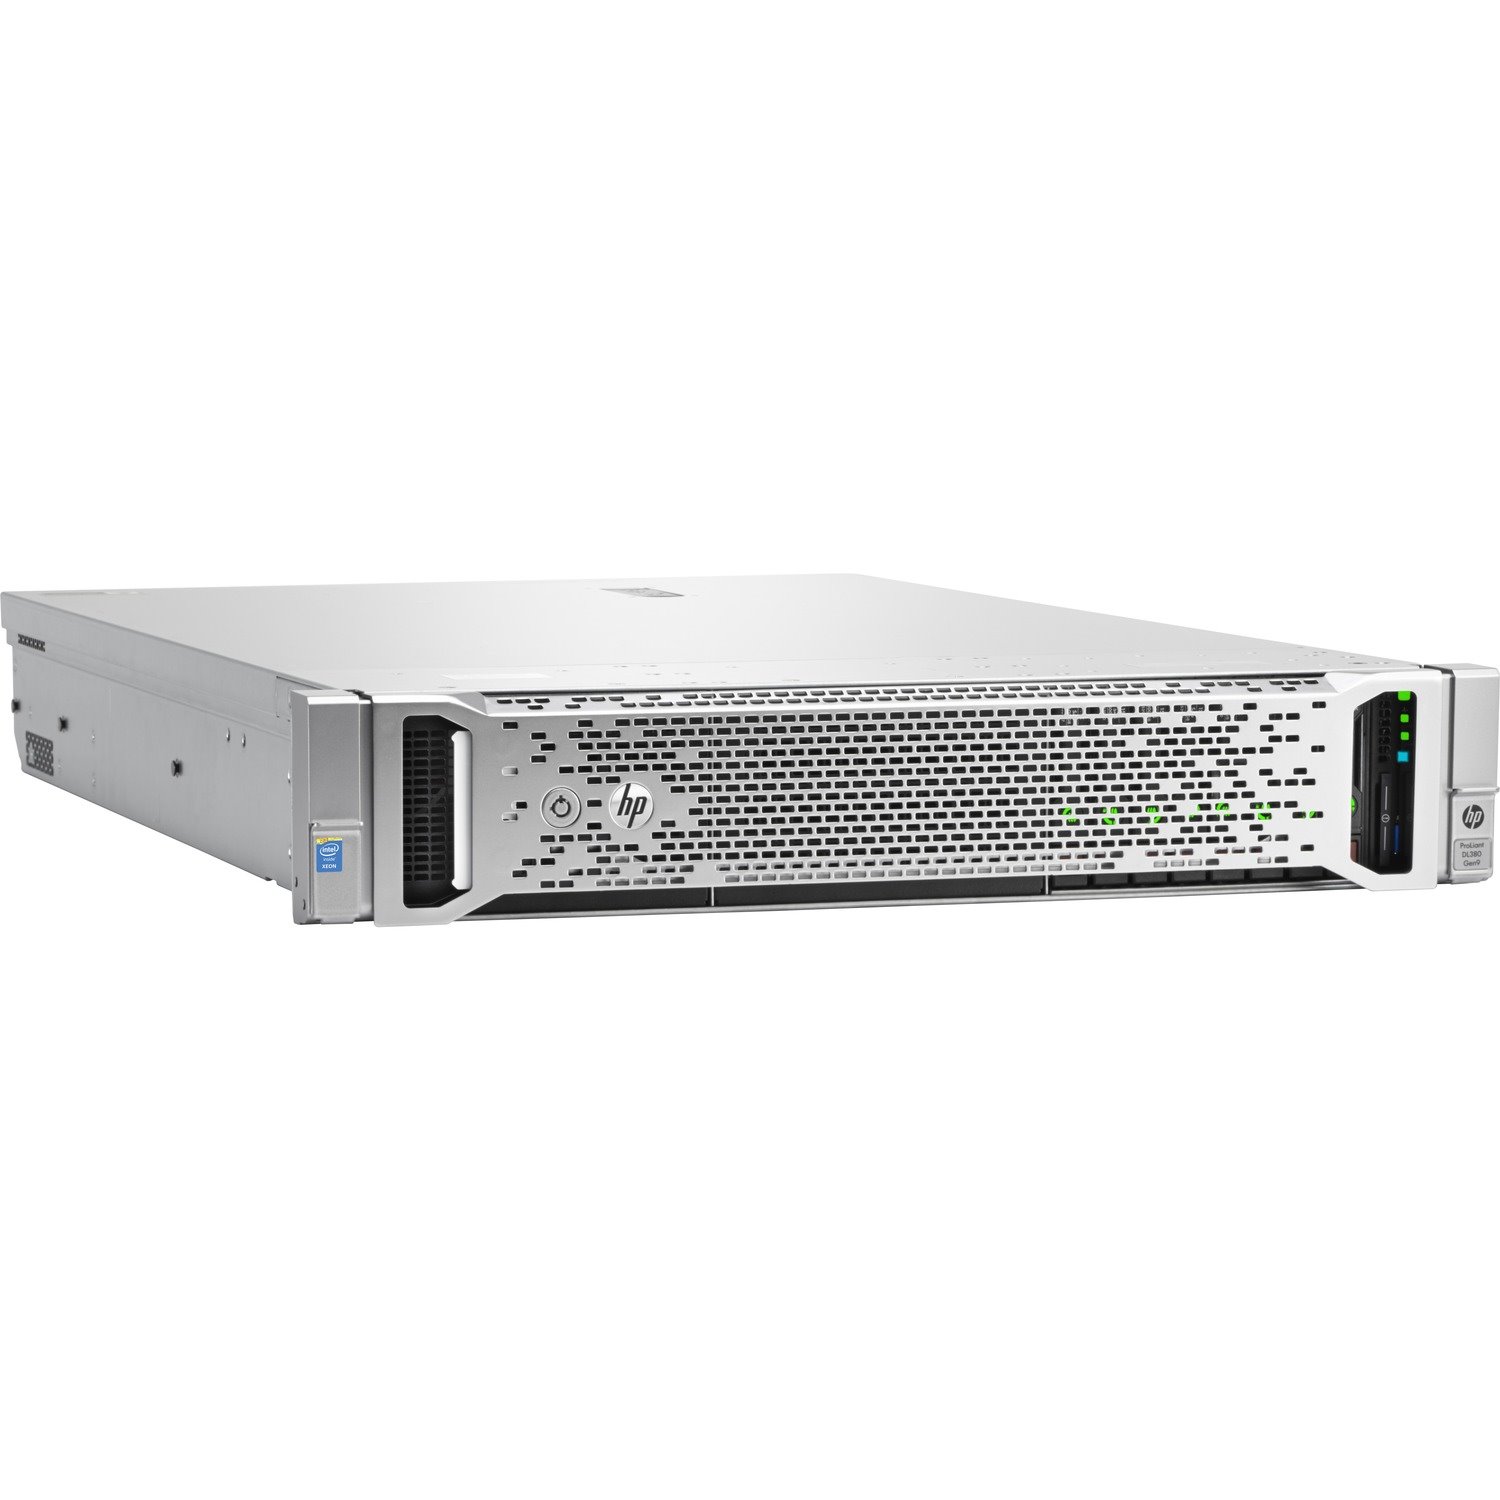 HPE-IMSourcing ProLiant DL380 G9 2U Rack Server - 1 x Intel Xeon E5-2640 v4 2.40 GHz - 16 GB RAM - Serial ATA/600, 12Gb/s SAS Controller - Refurbished